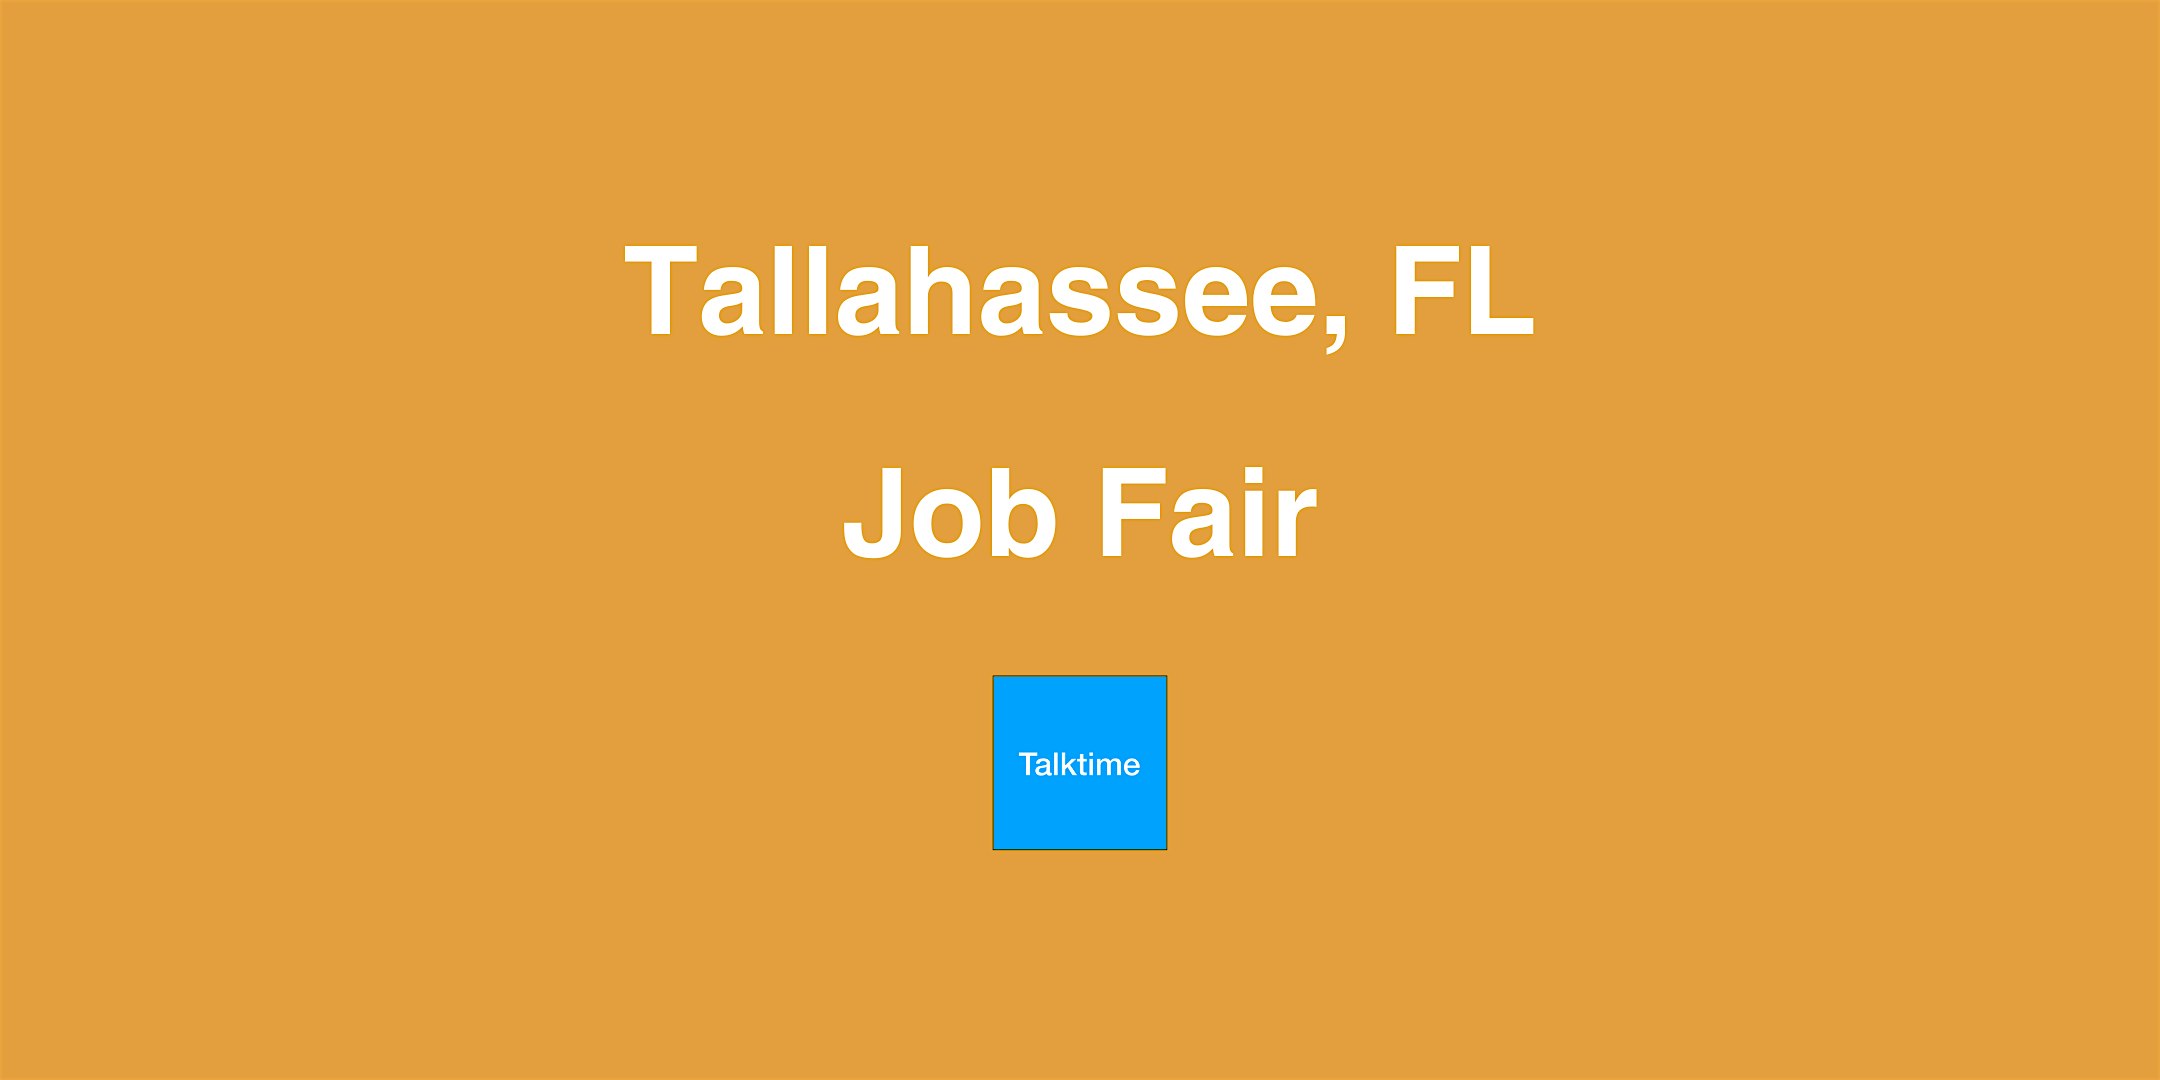 Job Fair - Tallahassee